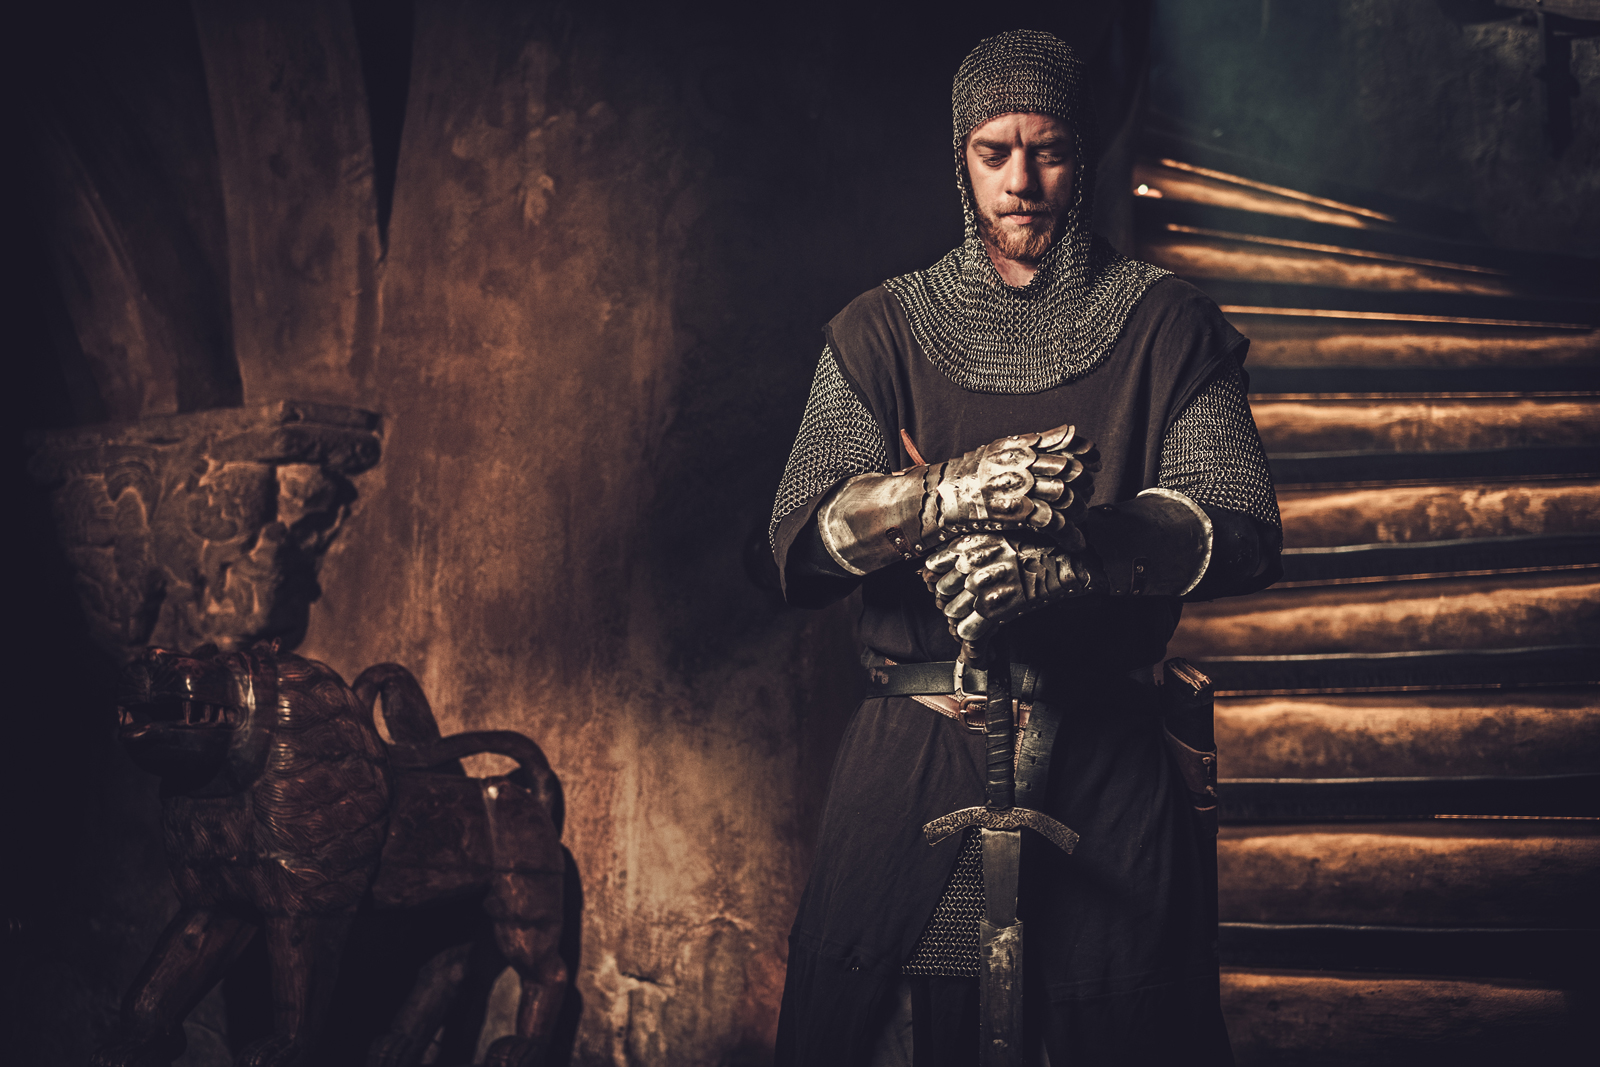 Medieval Knight. Photo by Nejron @ Envato